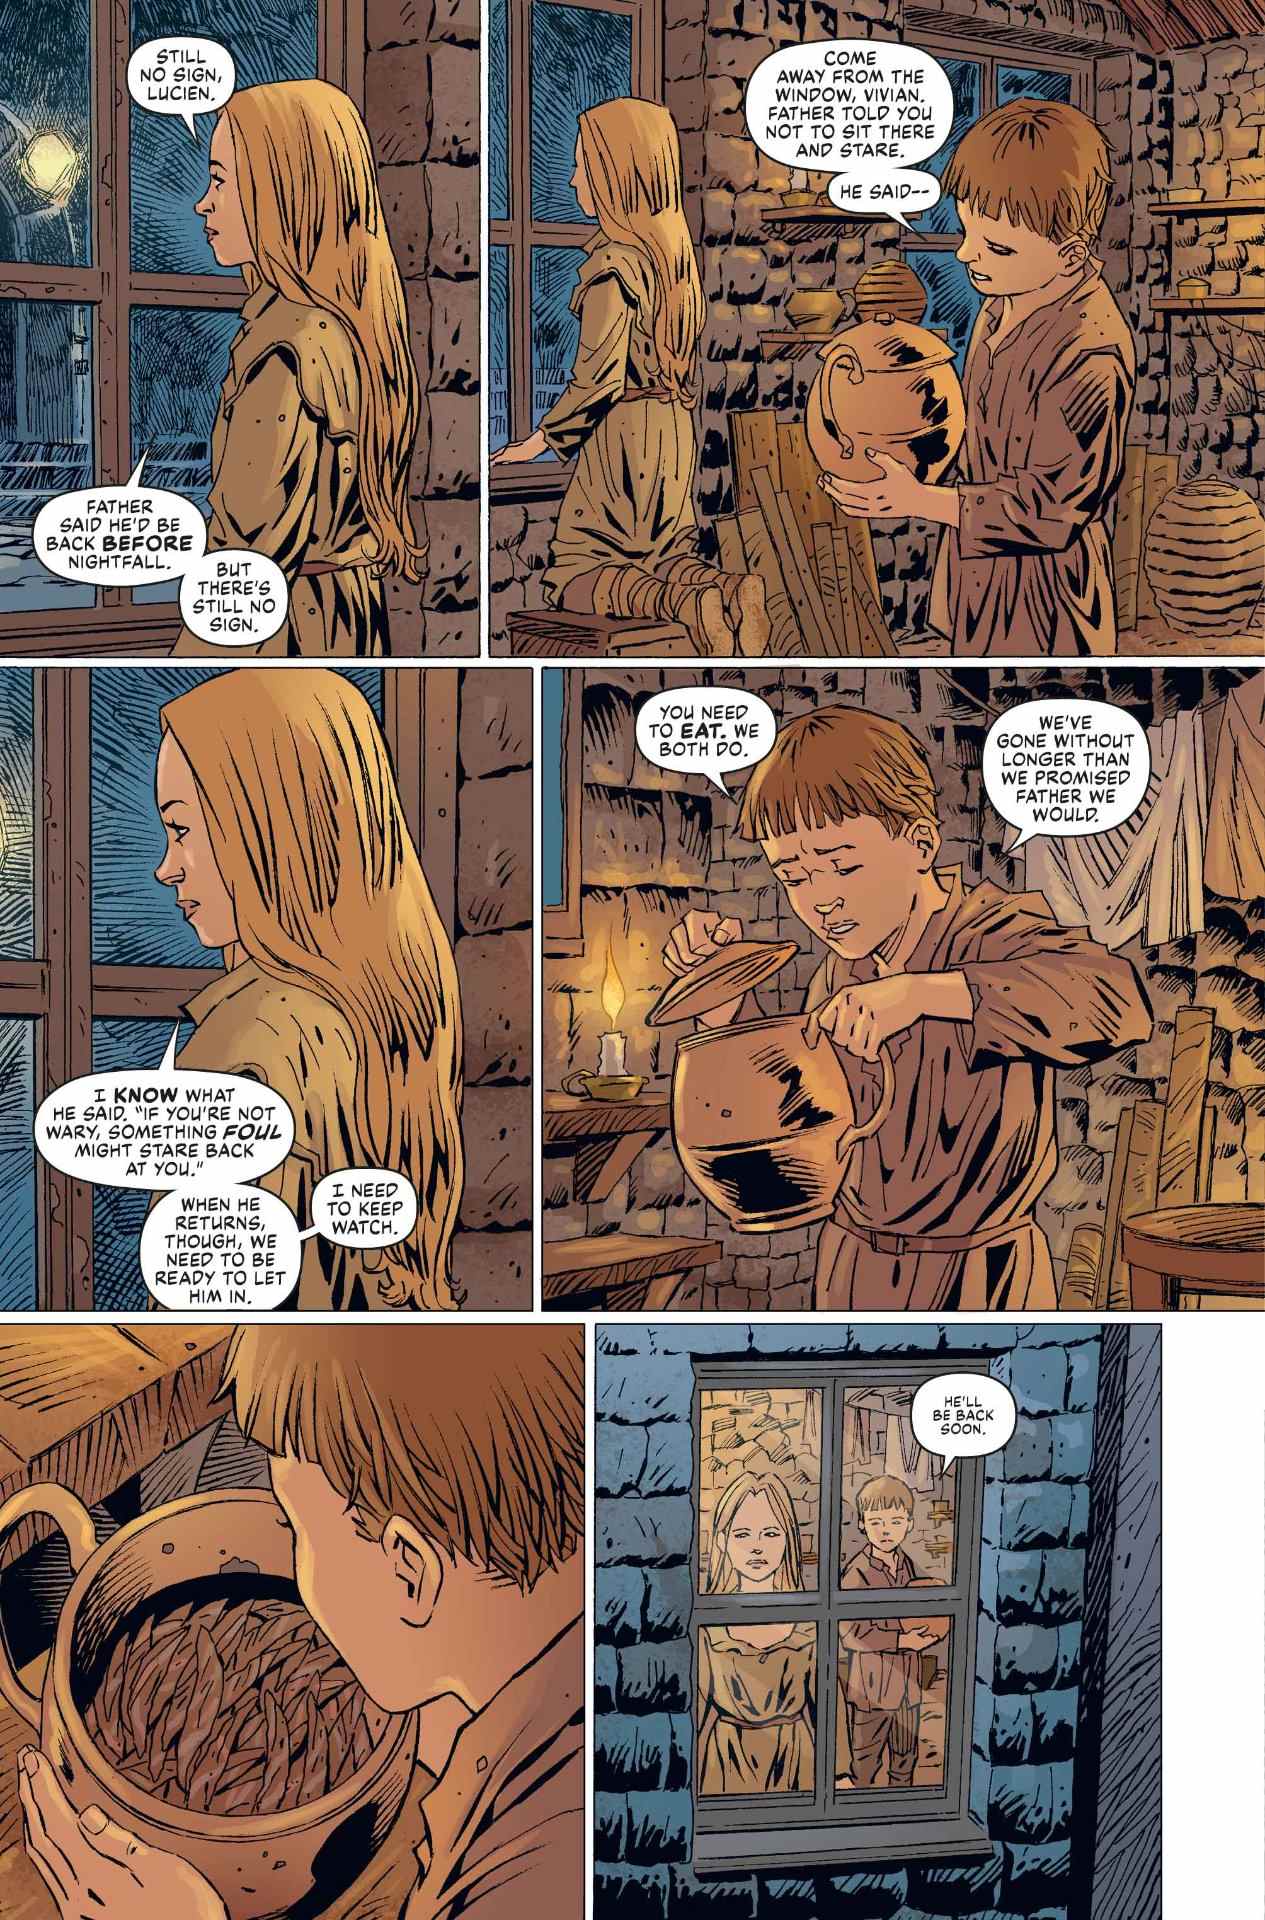 Bloodborne : La Dame aux Lanternes #1, page 2